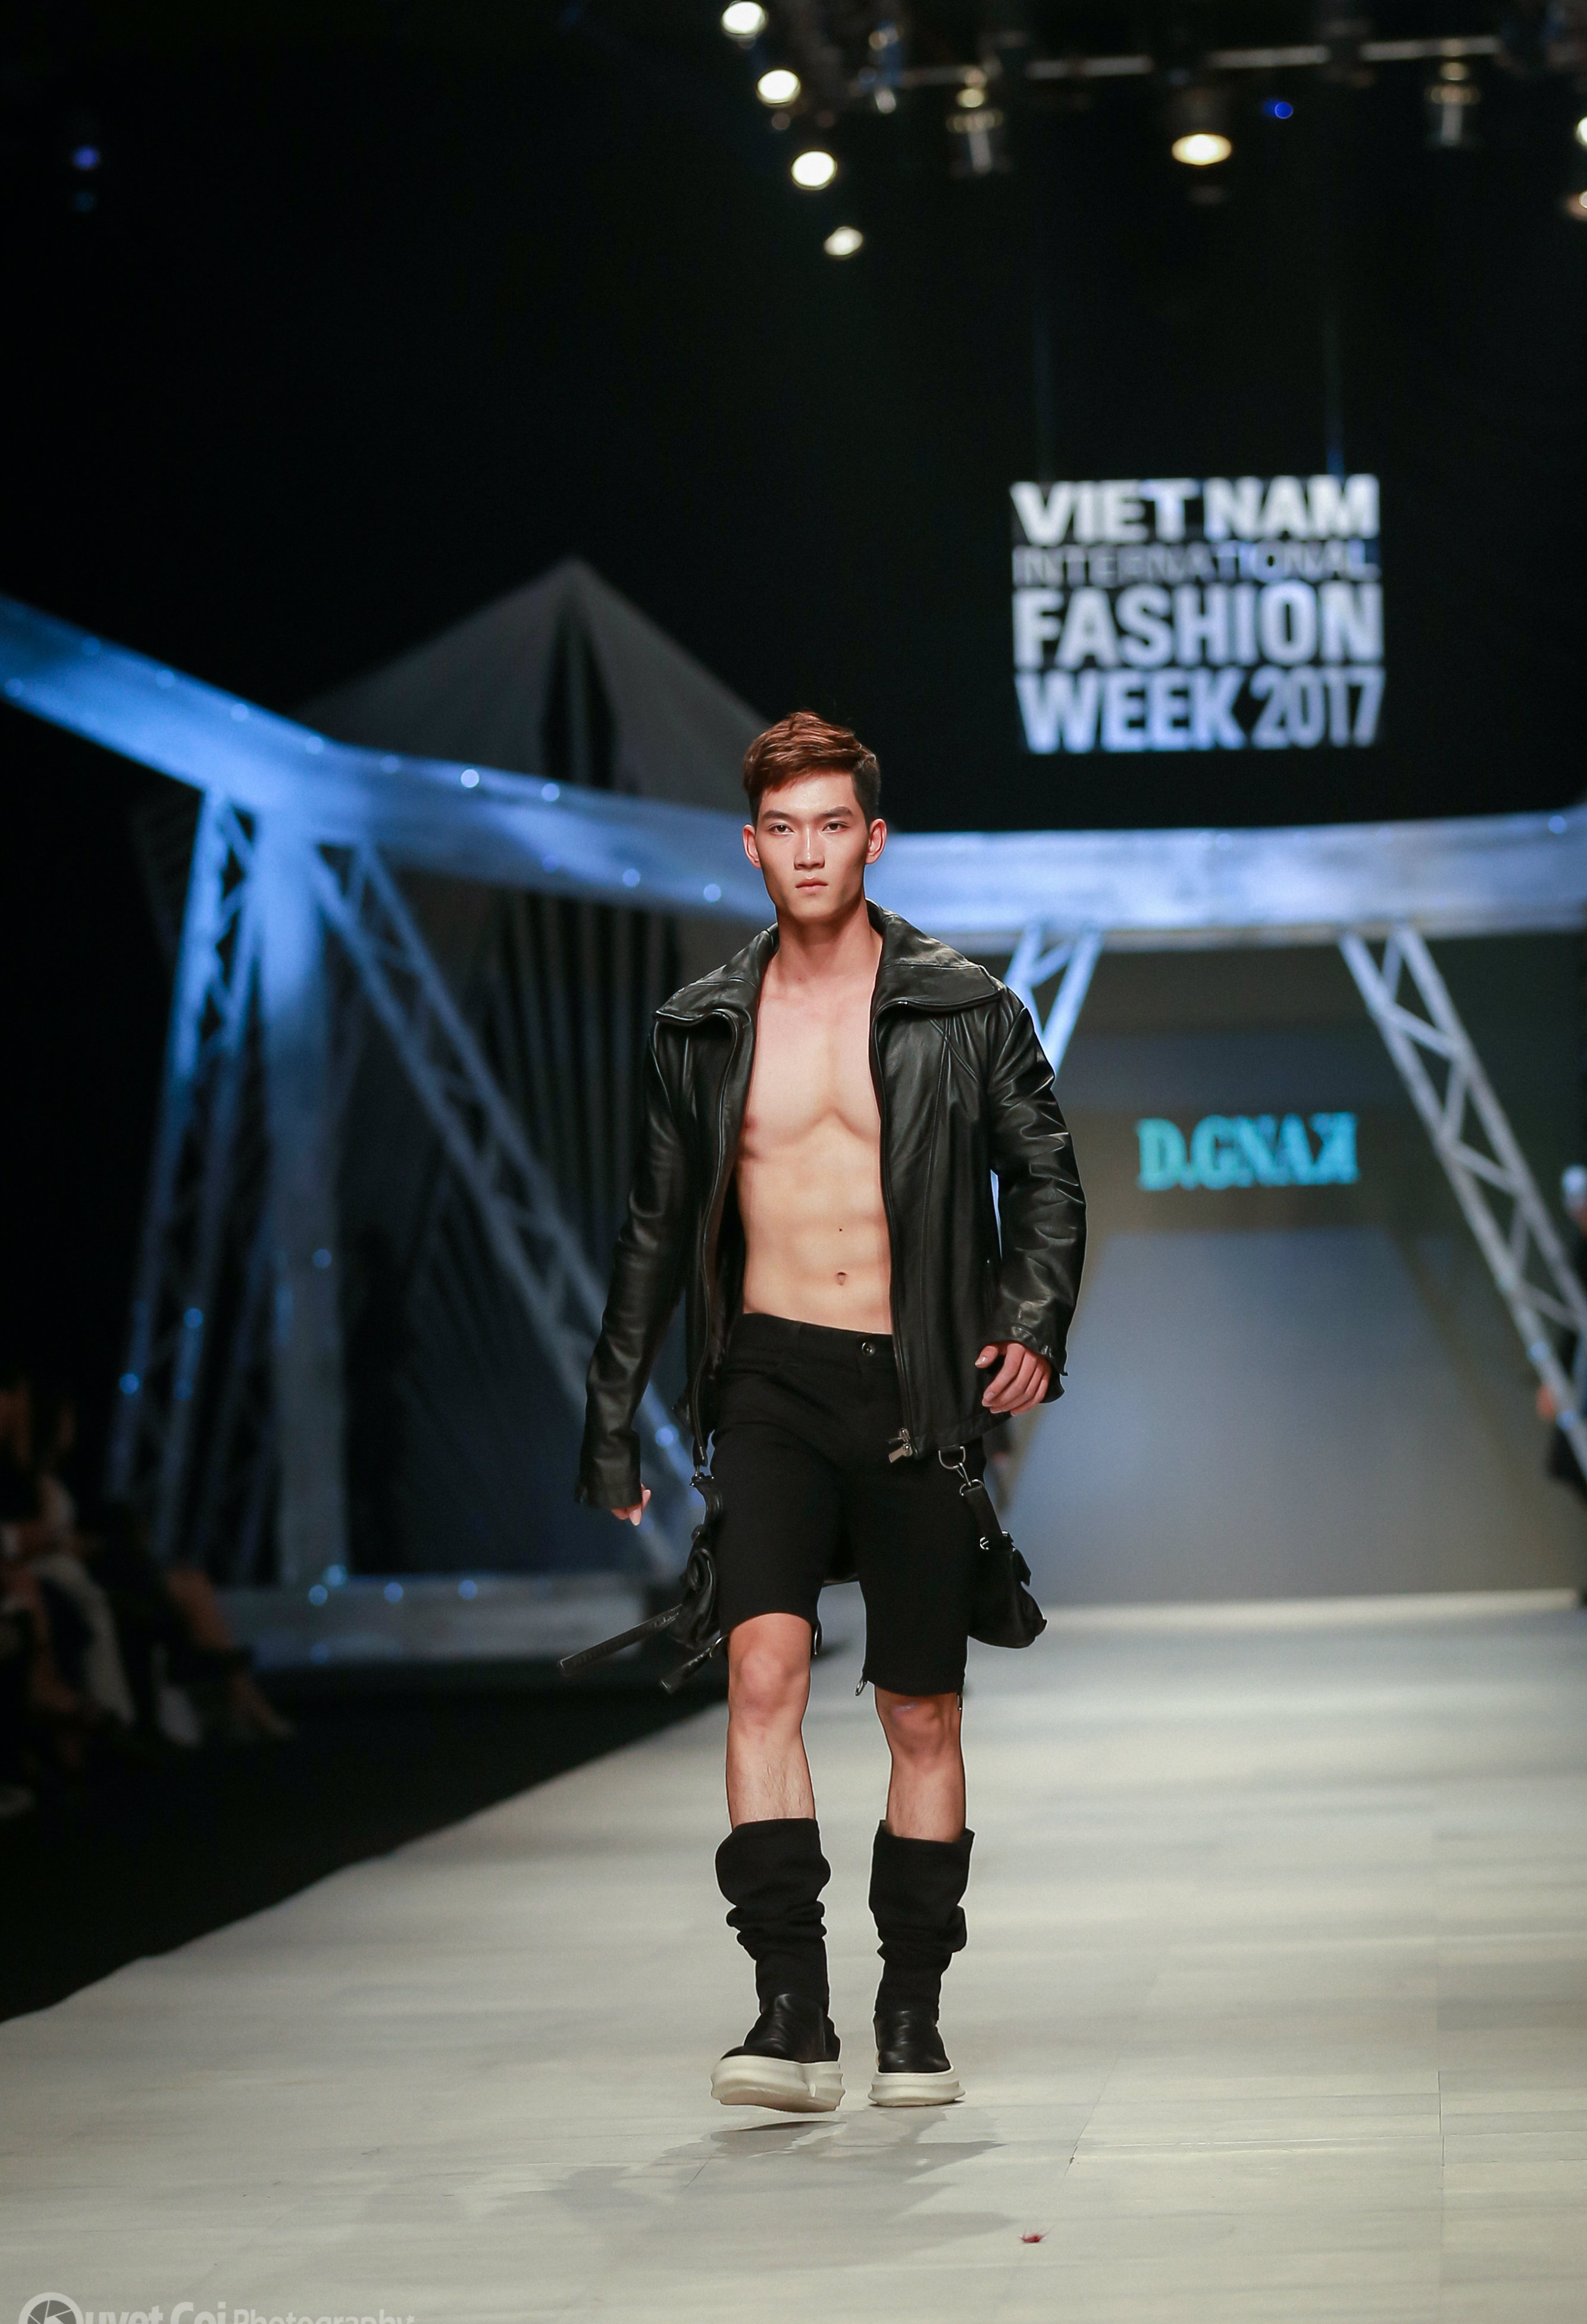  Anh Tu on the Vietnam International Fashion Week 2017 catwalk